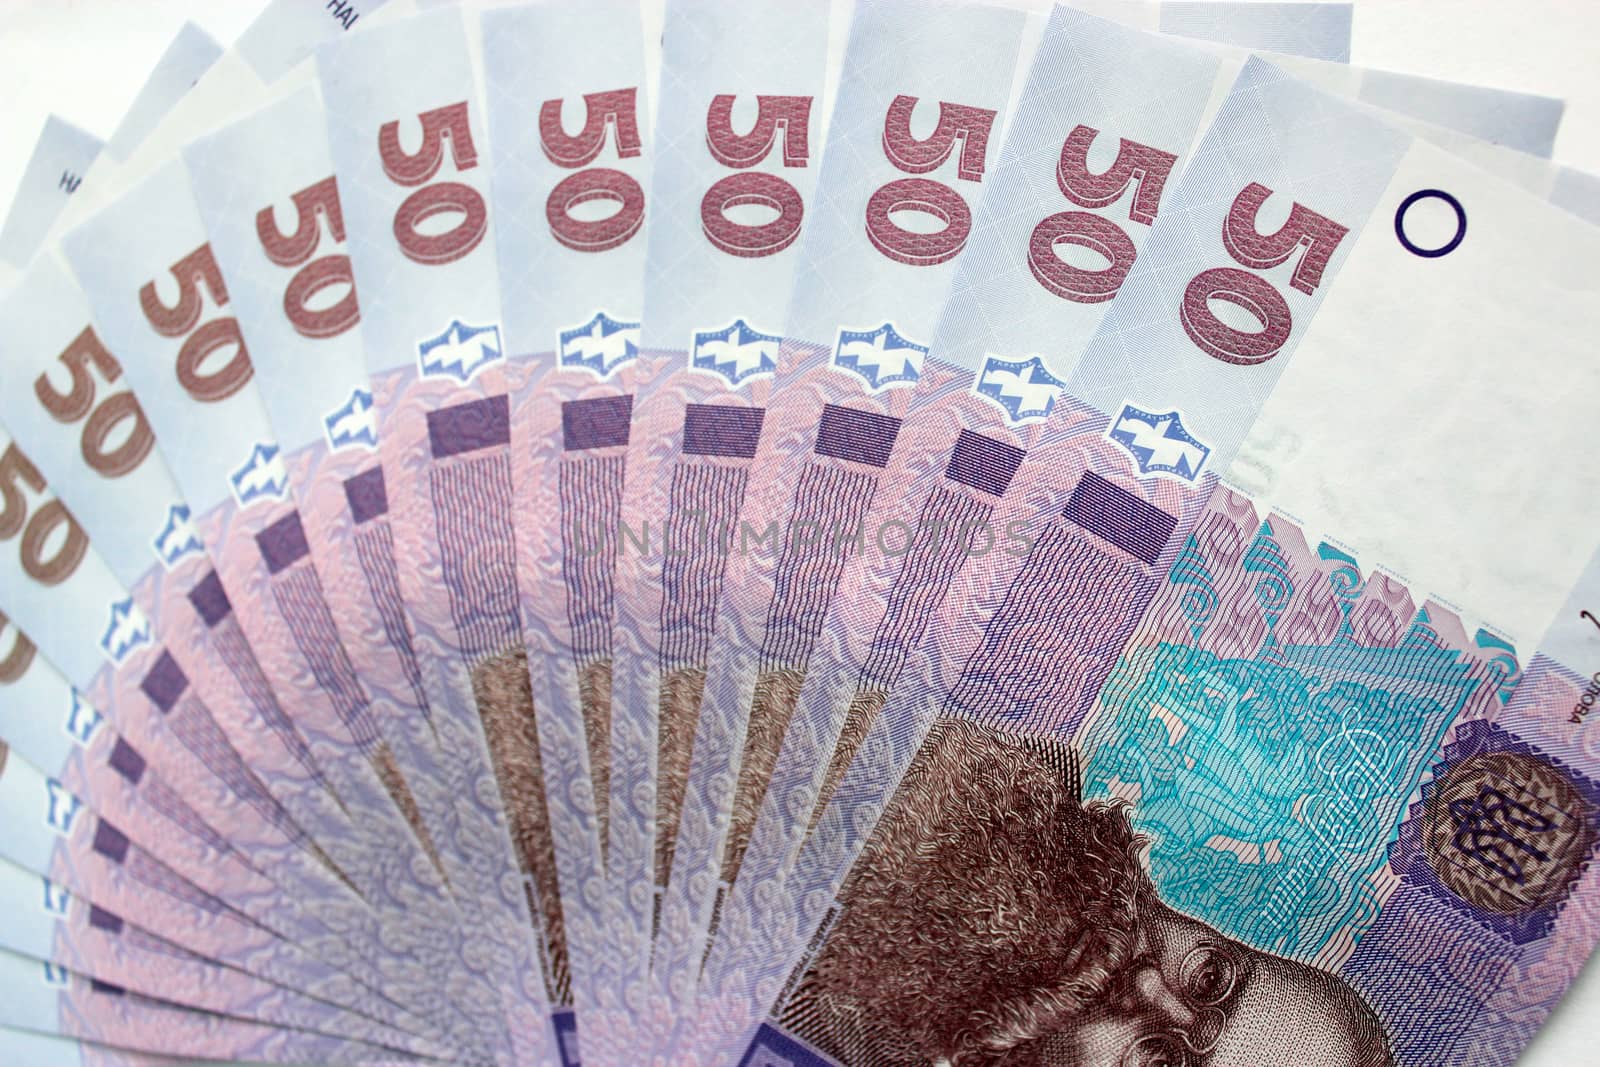 background of the Ukrainian money value of 50 grivnas by alexmak